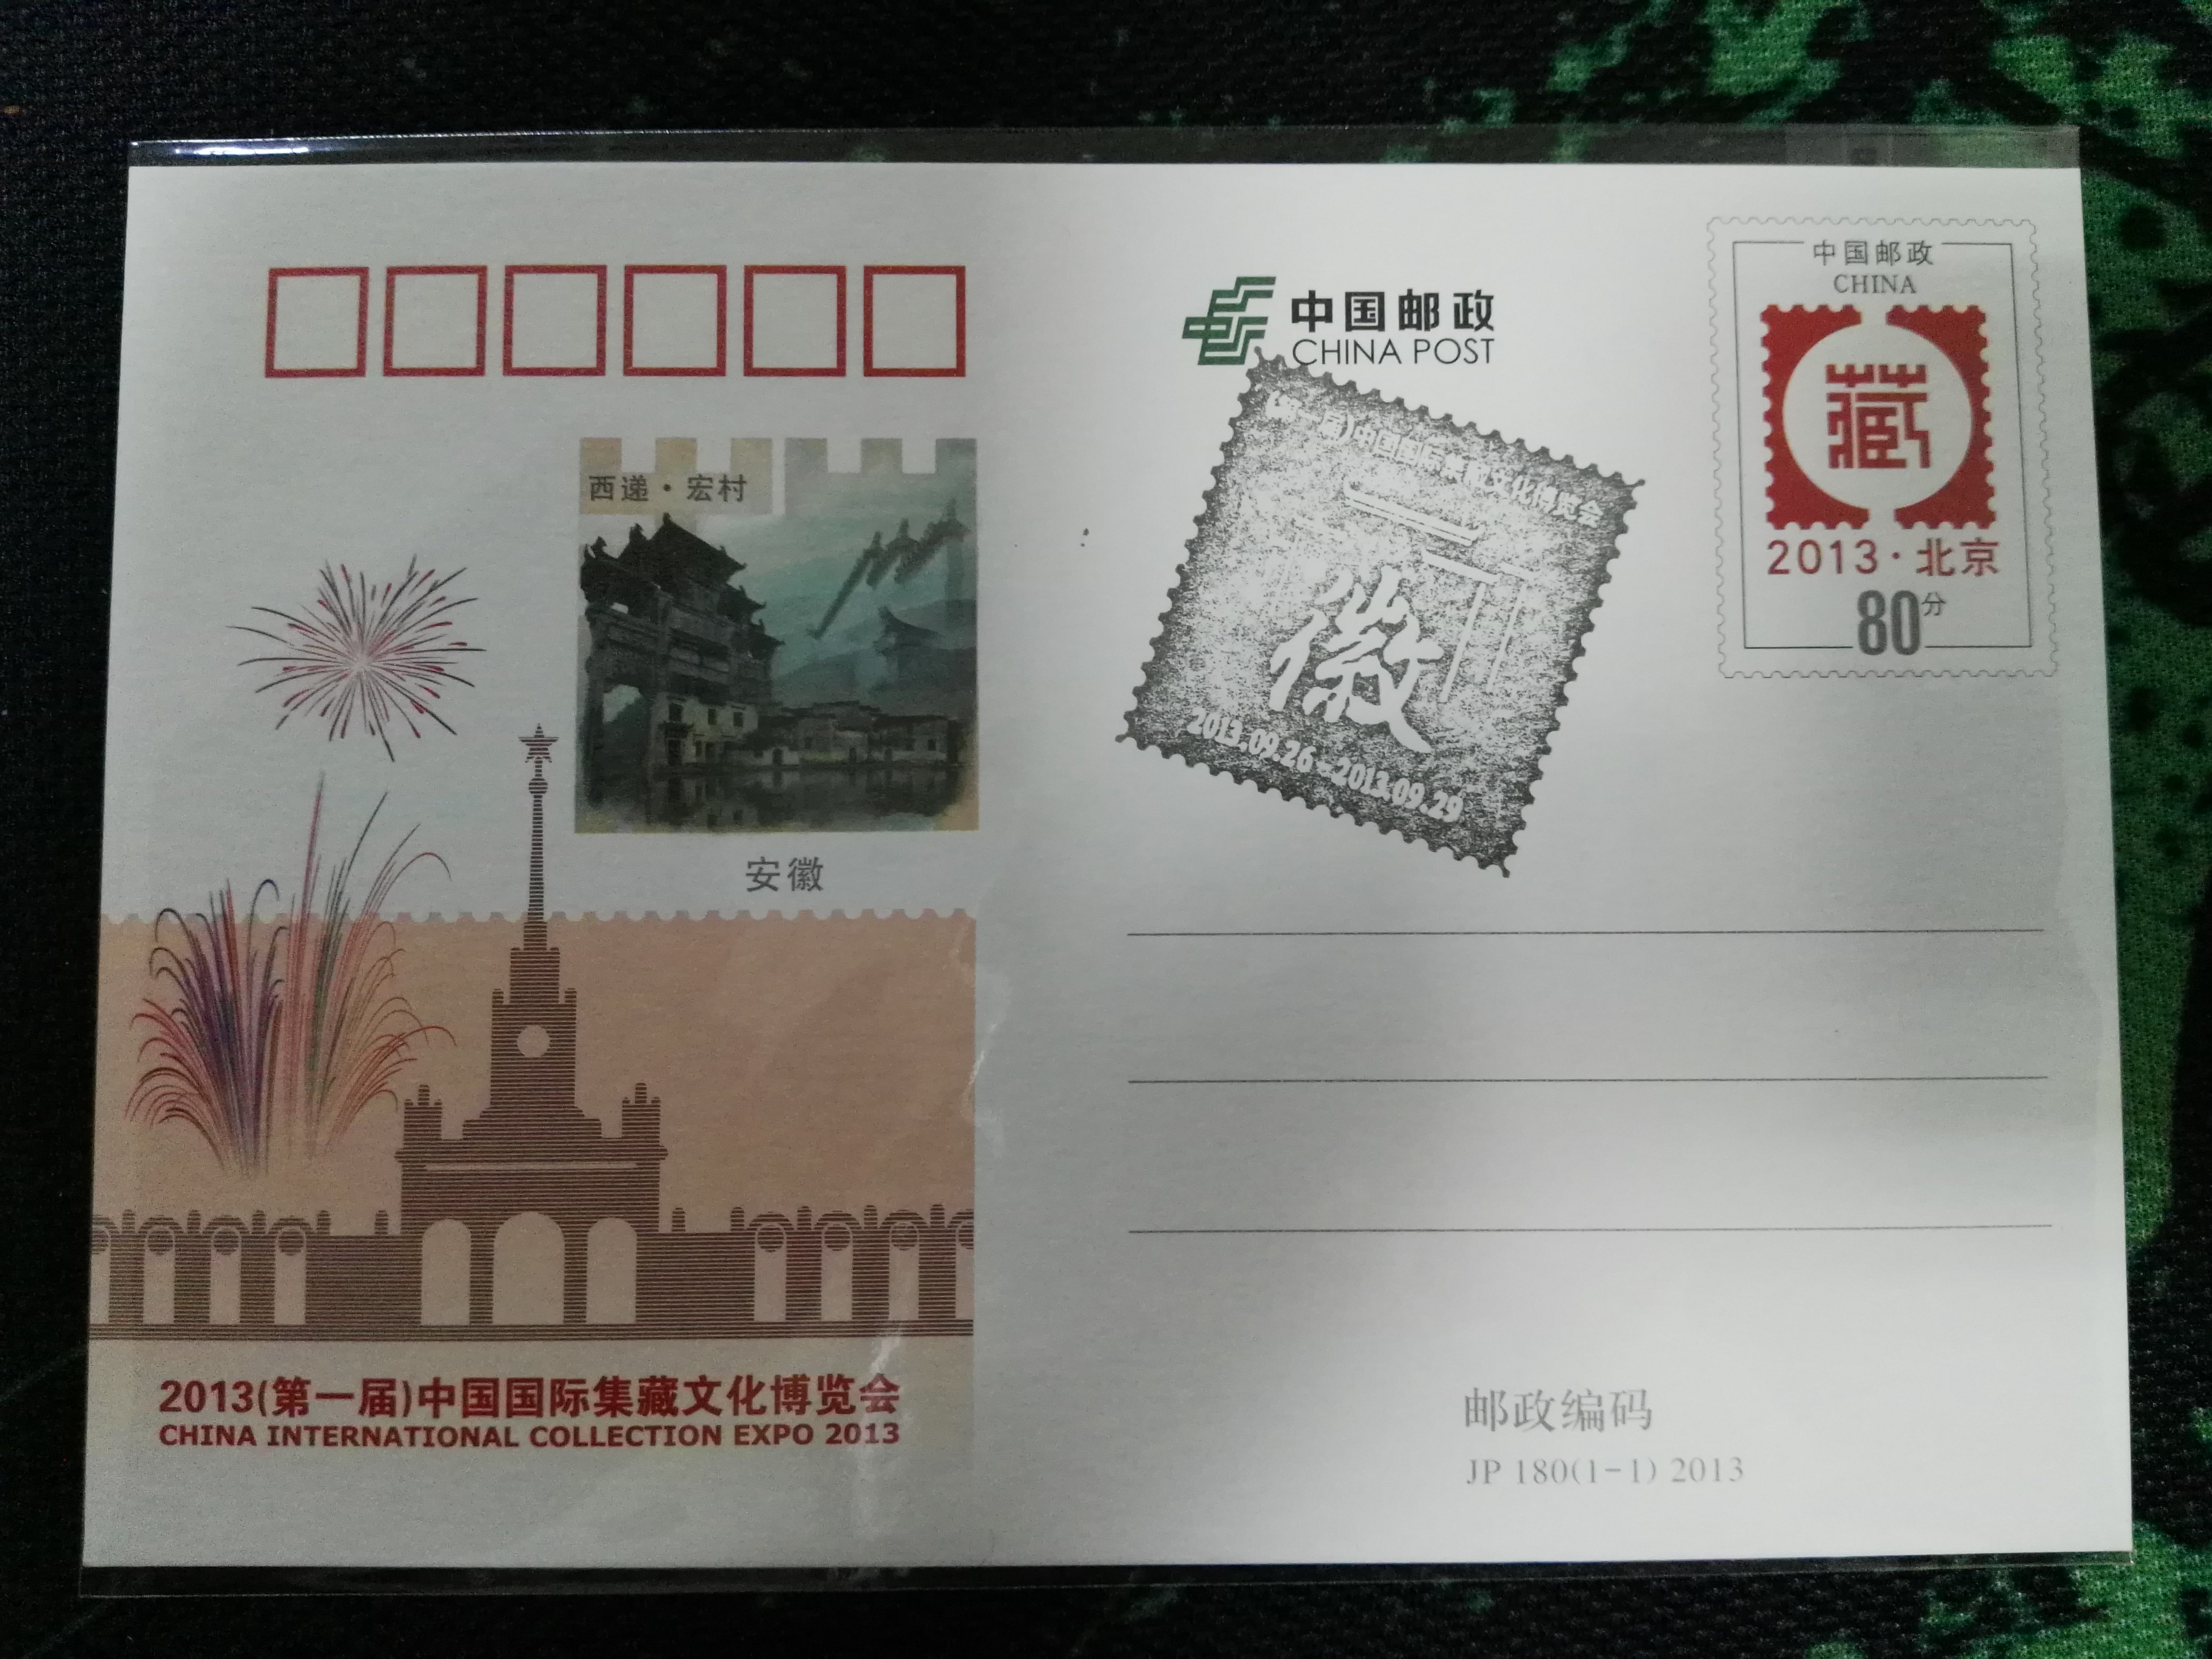 JP180 2013第一届国际集藏文化博览会纪念邮资片纪念戳【安徽版】